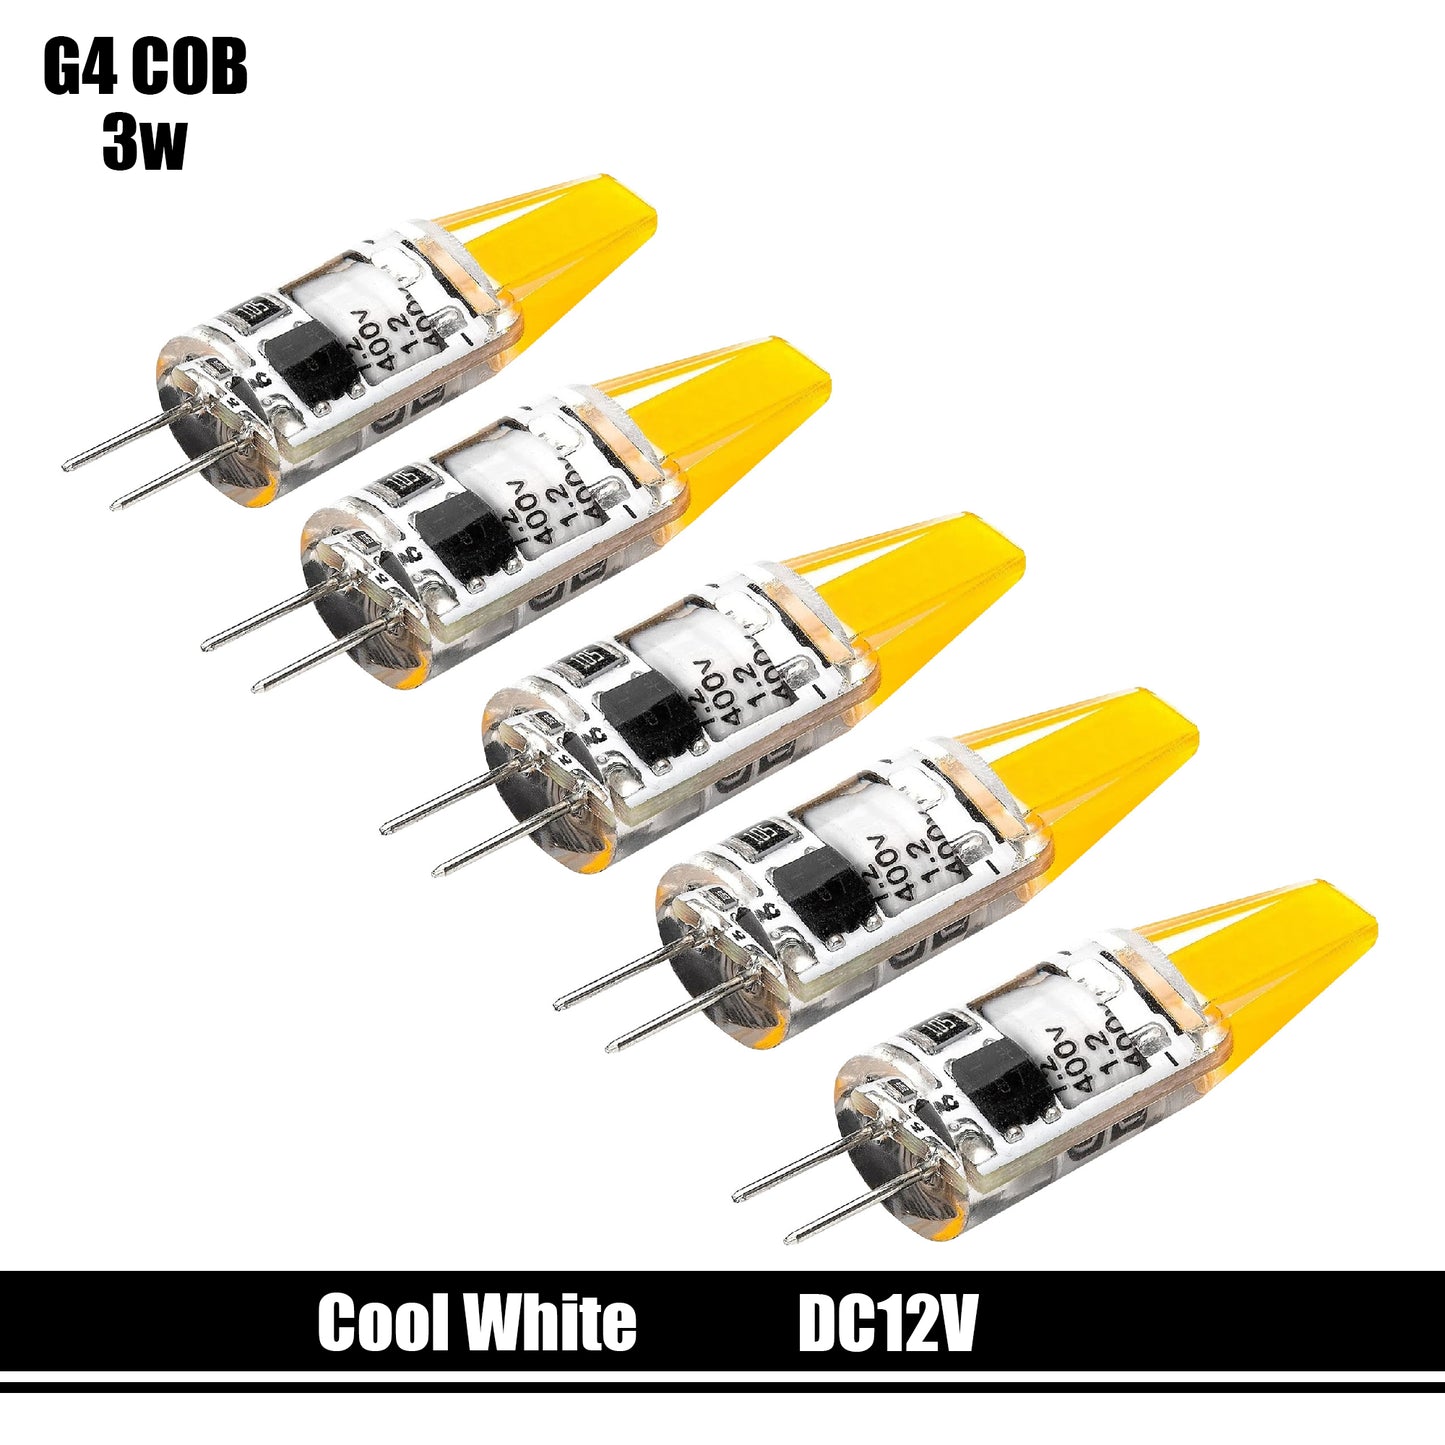 G4 COB Chip DC 12V 3W LED Light Replace Halogen Bulb ~ 3126